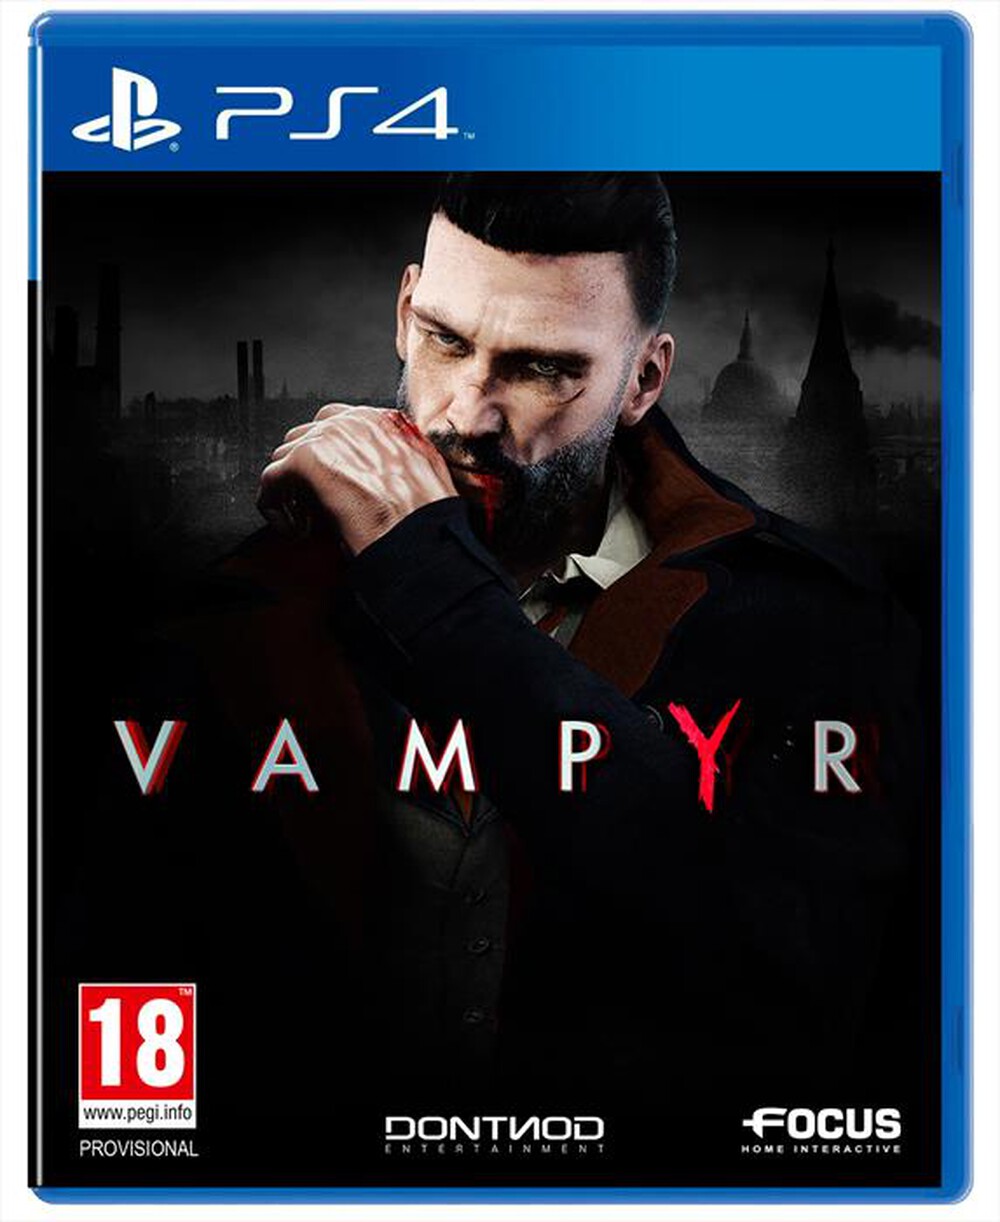 "HALIFAX - Vampyr PS4"